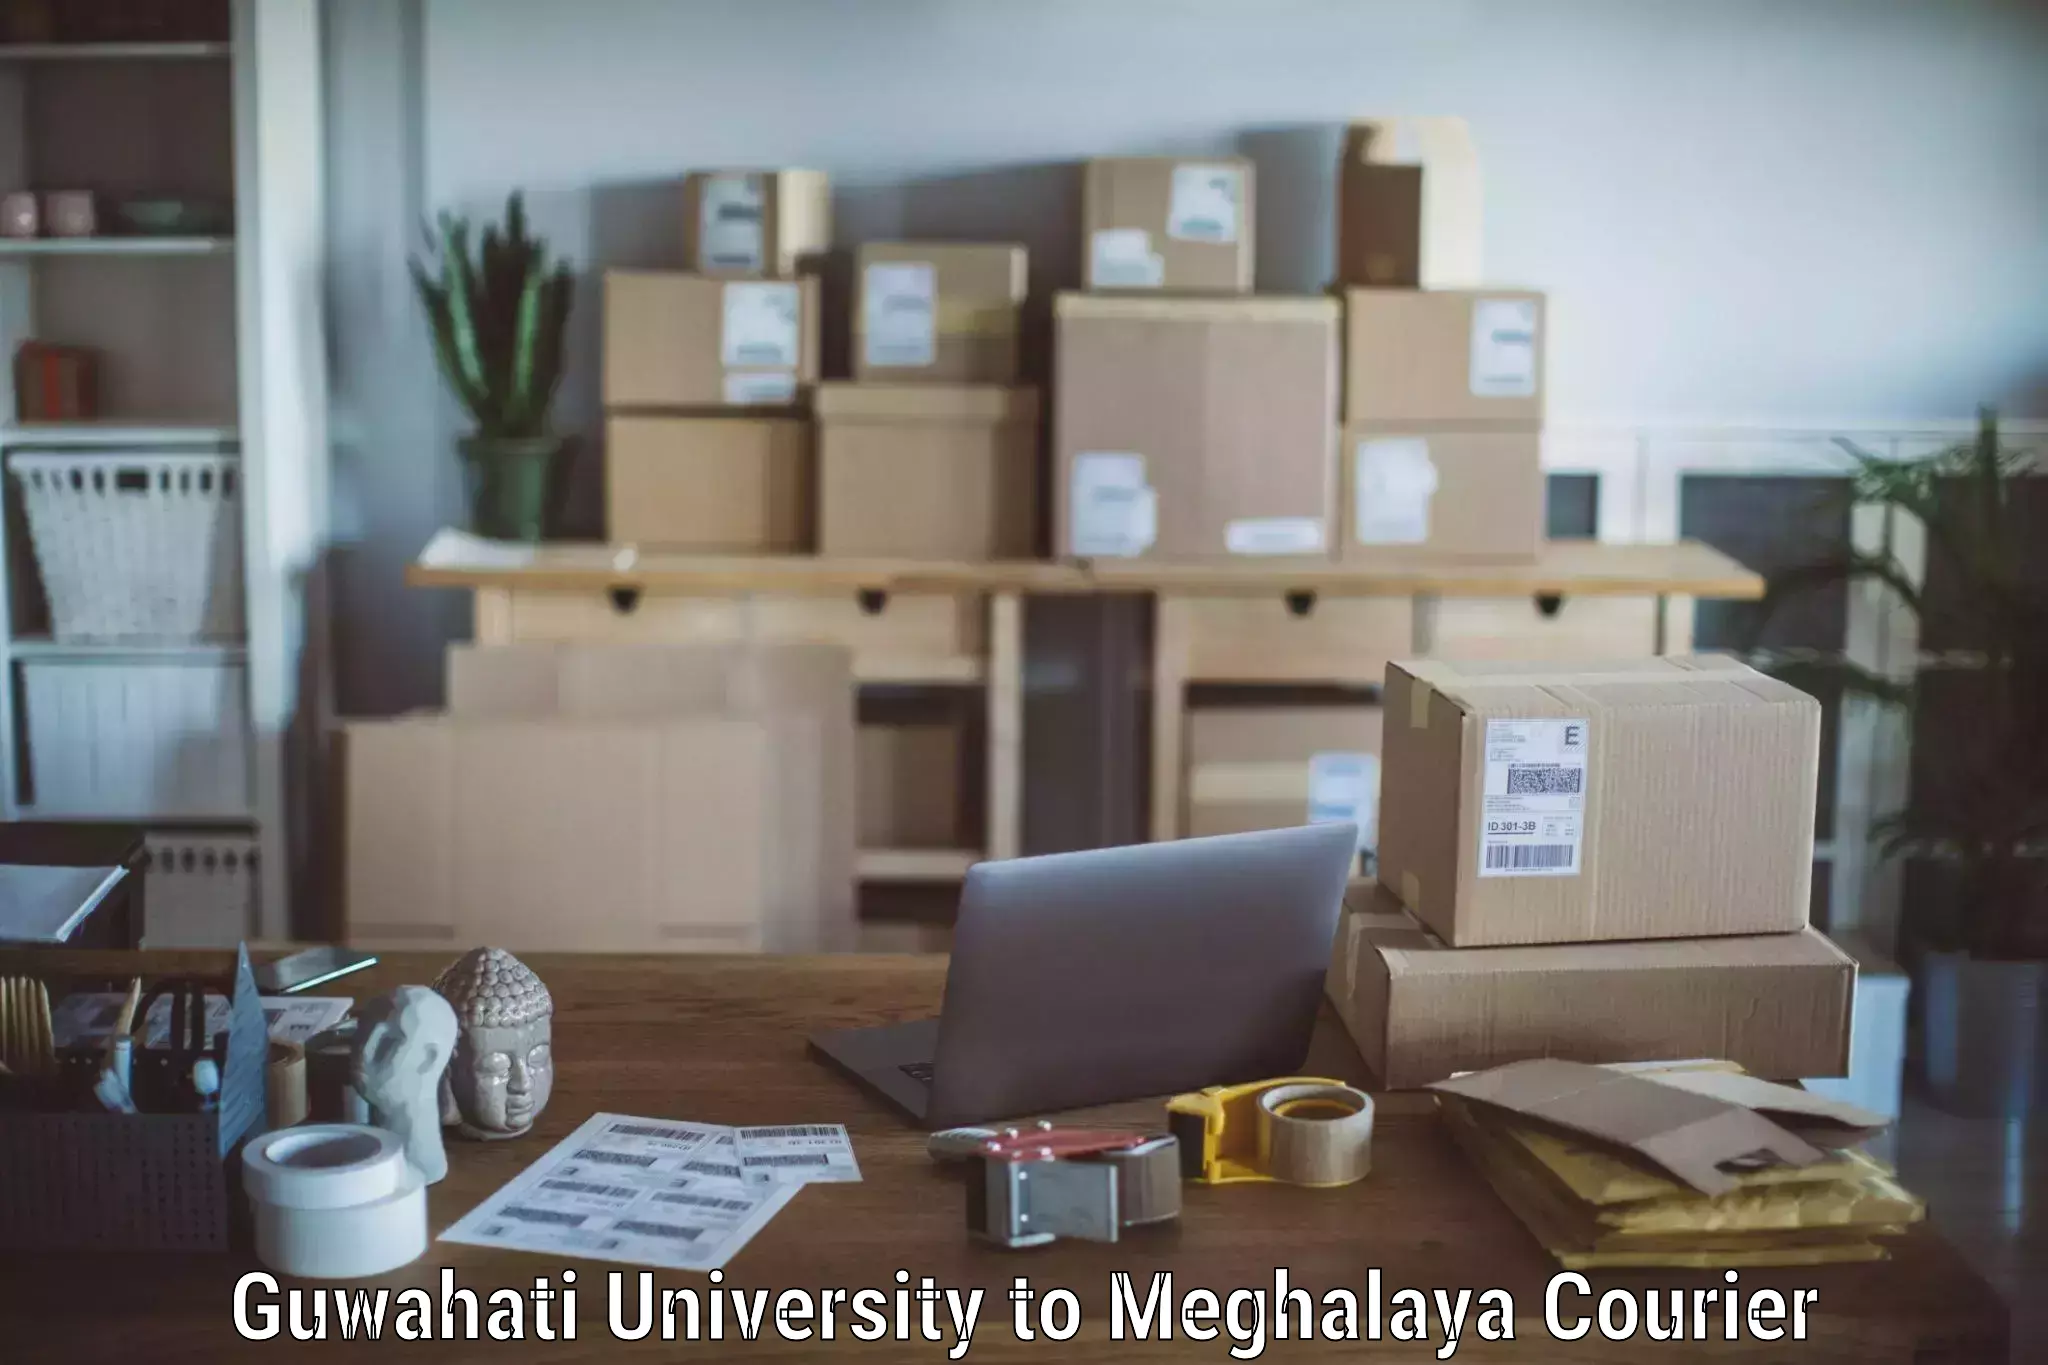 Budget-friendly movers Guwahati University to Shillong